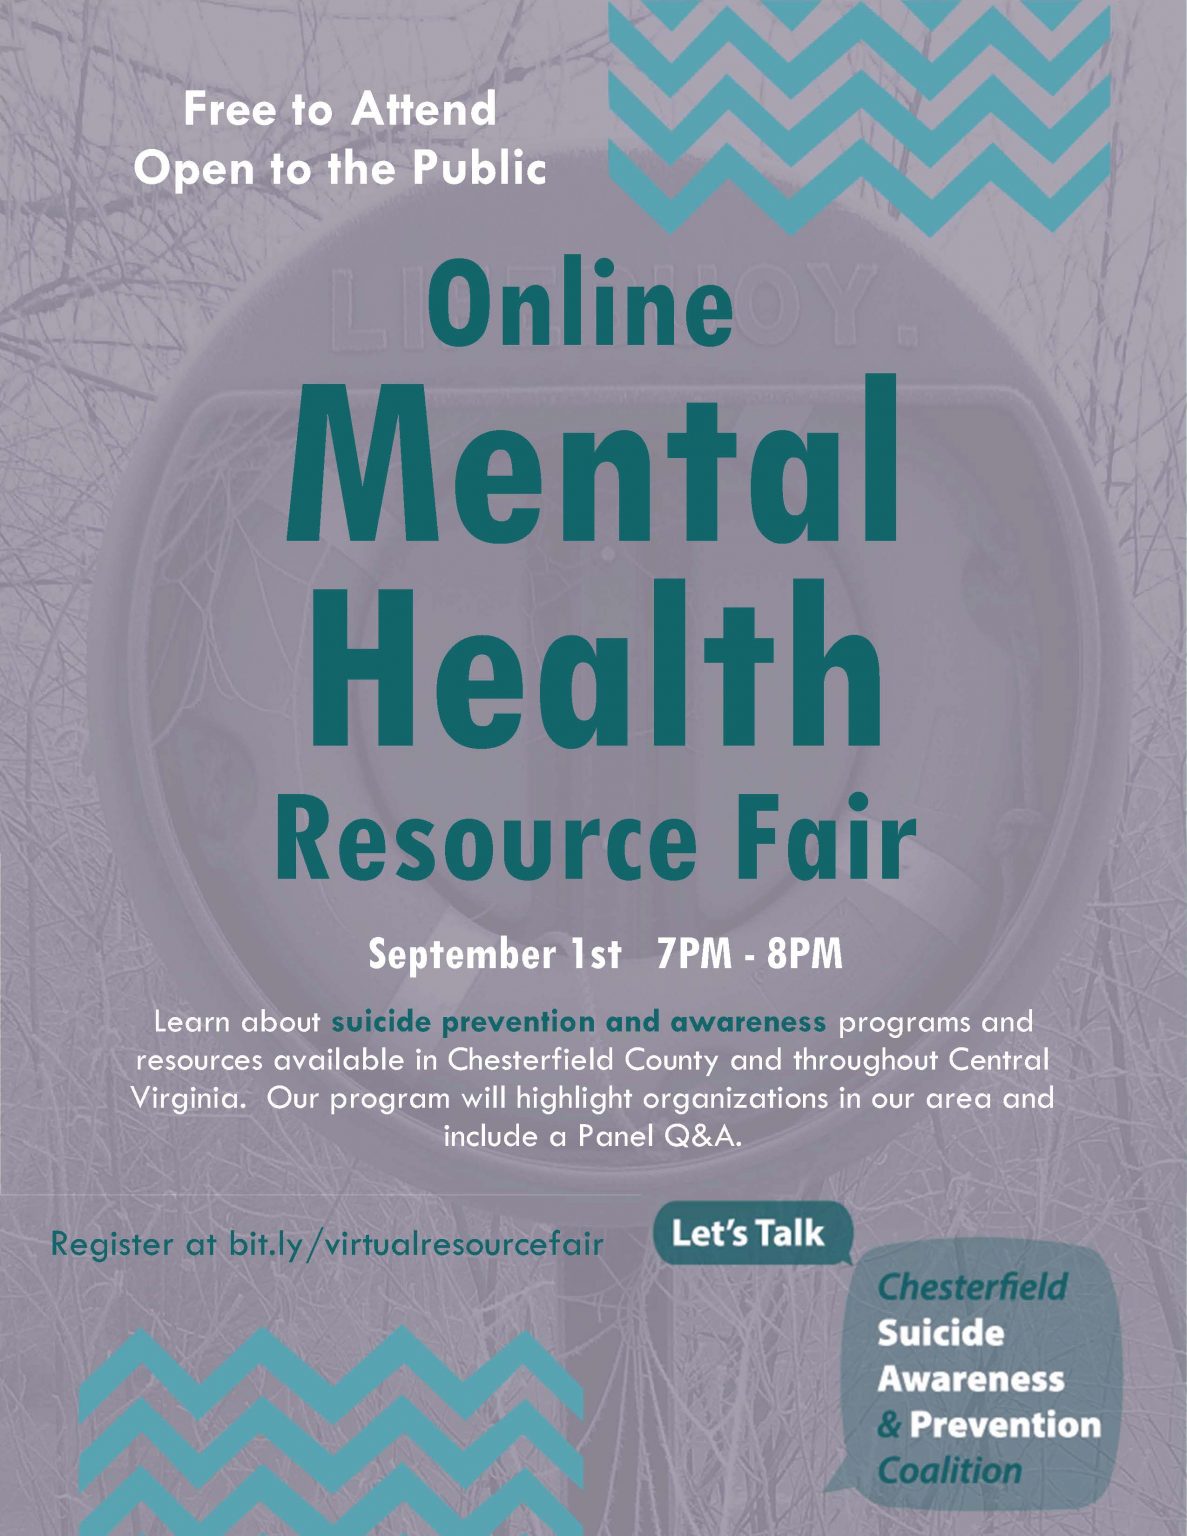 Online Mental Health Resource Fair BeWellVa